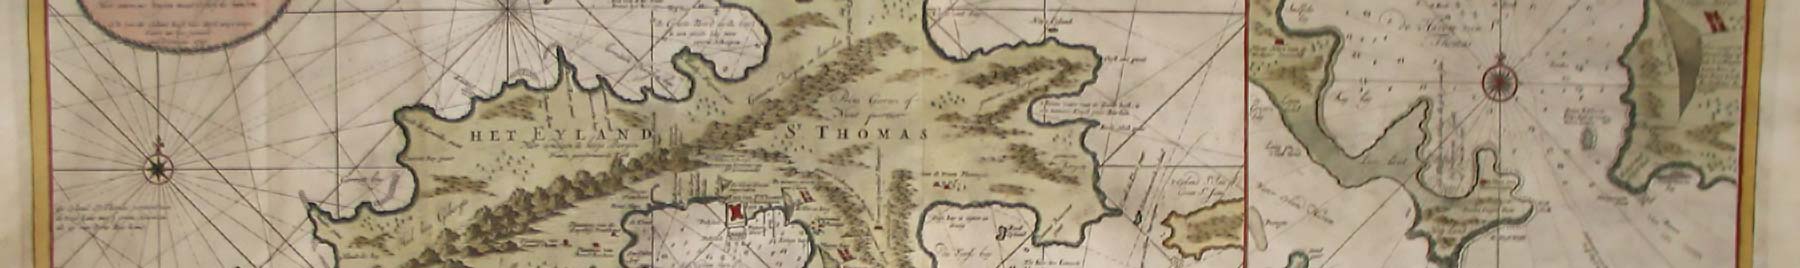 map of St. Thomas Island